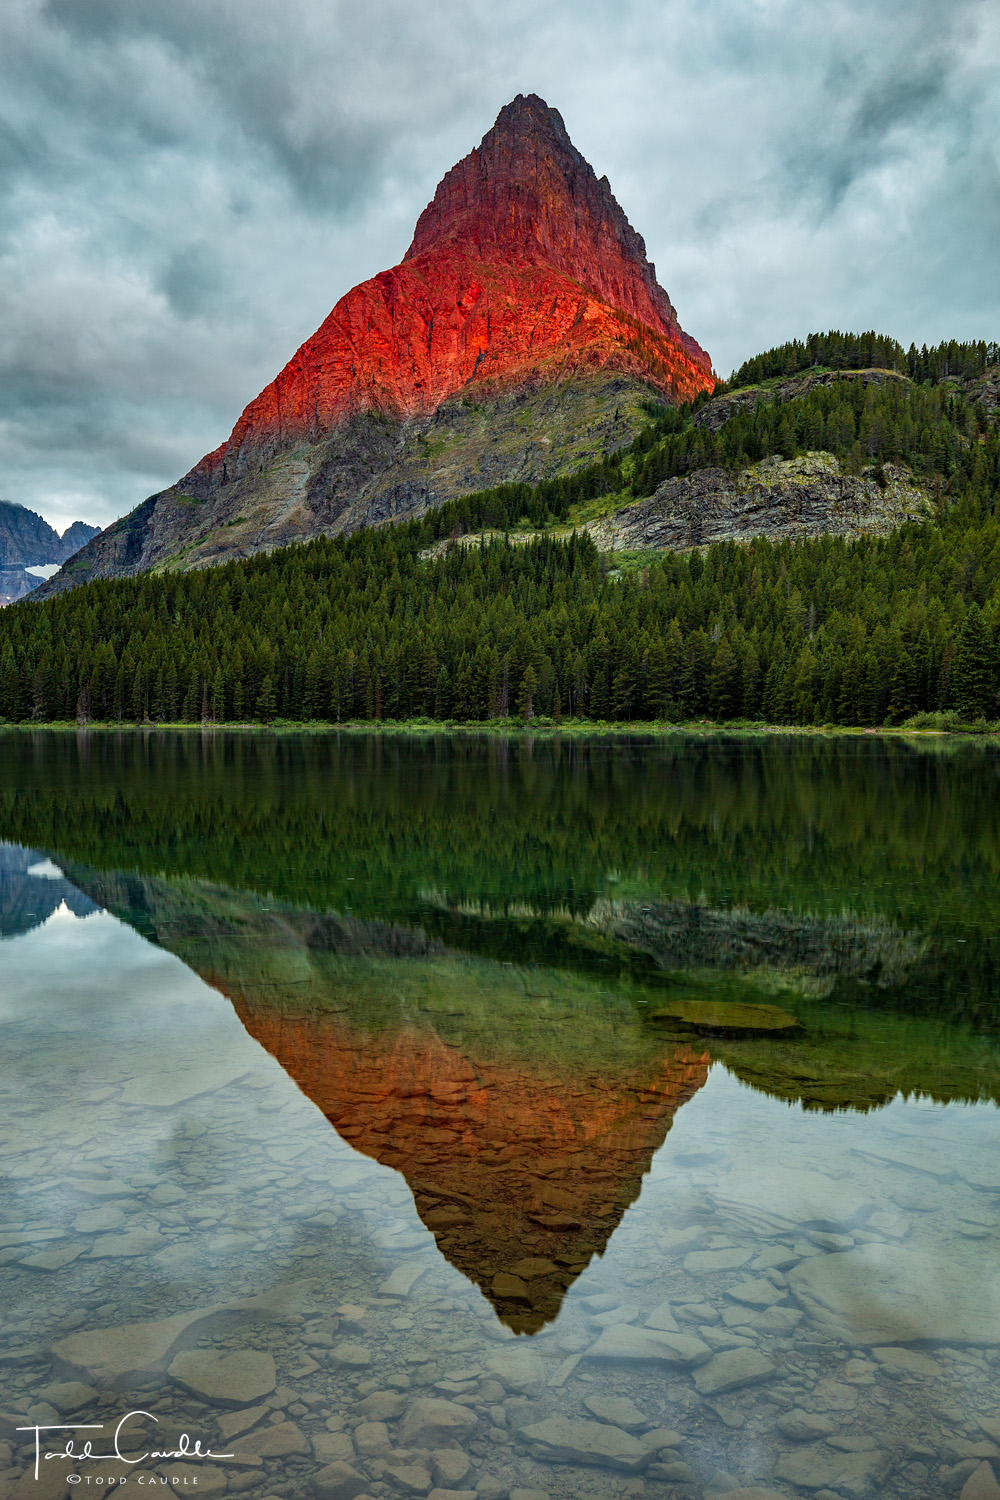 A fleeting moment of alpenglow light at sunrise illuminates a dramatic peak bordering Swiftcurrent Lake.